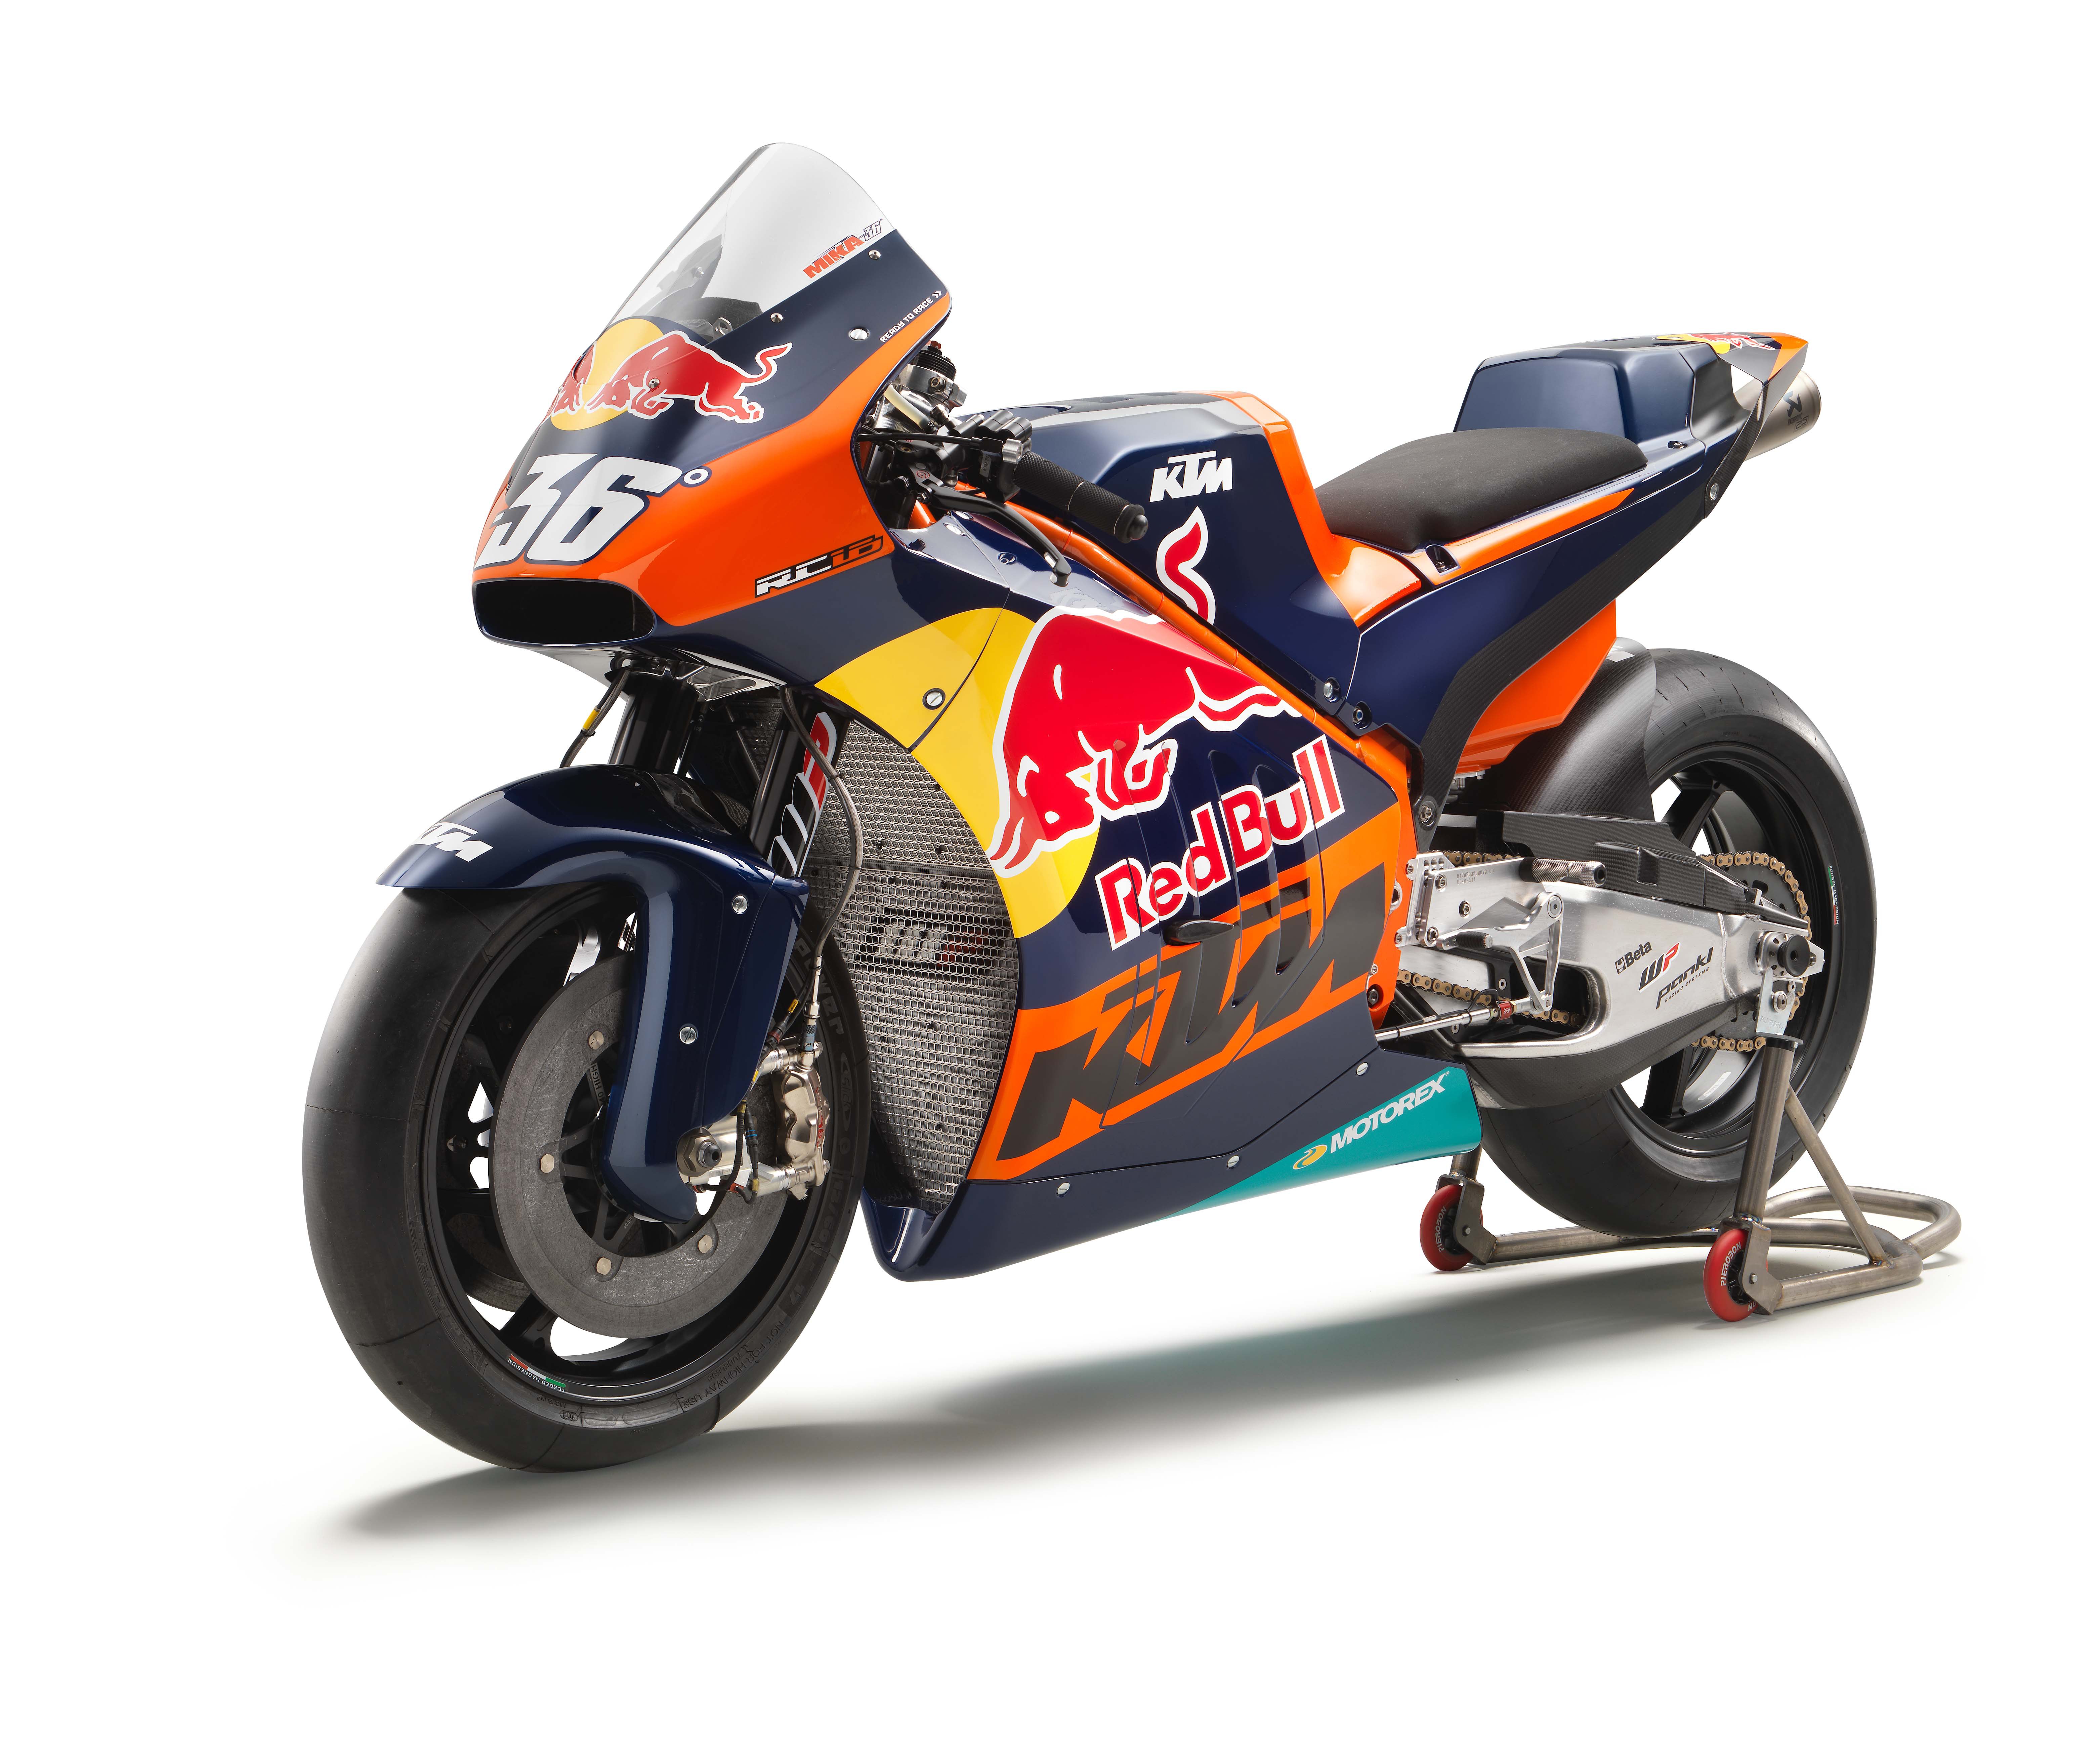 KTM reveals MotoGP bike with race livery ShiftingGears